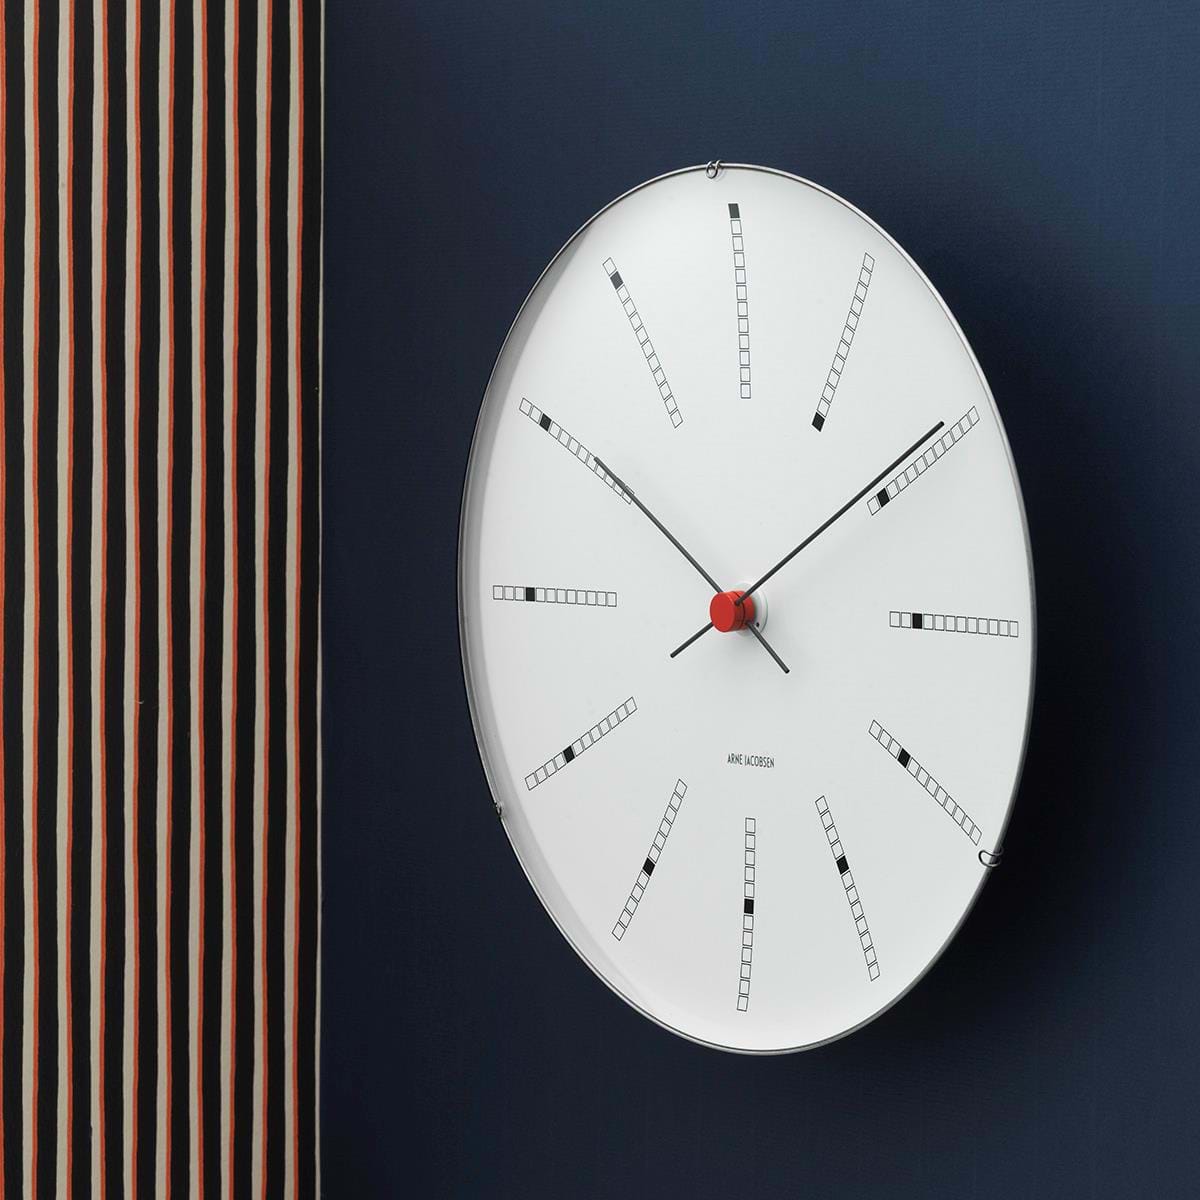 Arne Jacobsen Clocks Roman Wall Clock Ø21cm - Wall clocks 